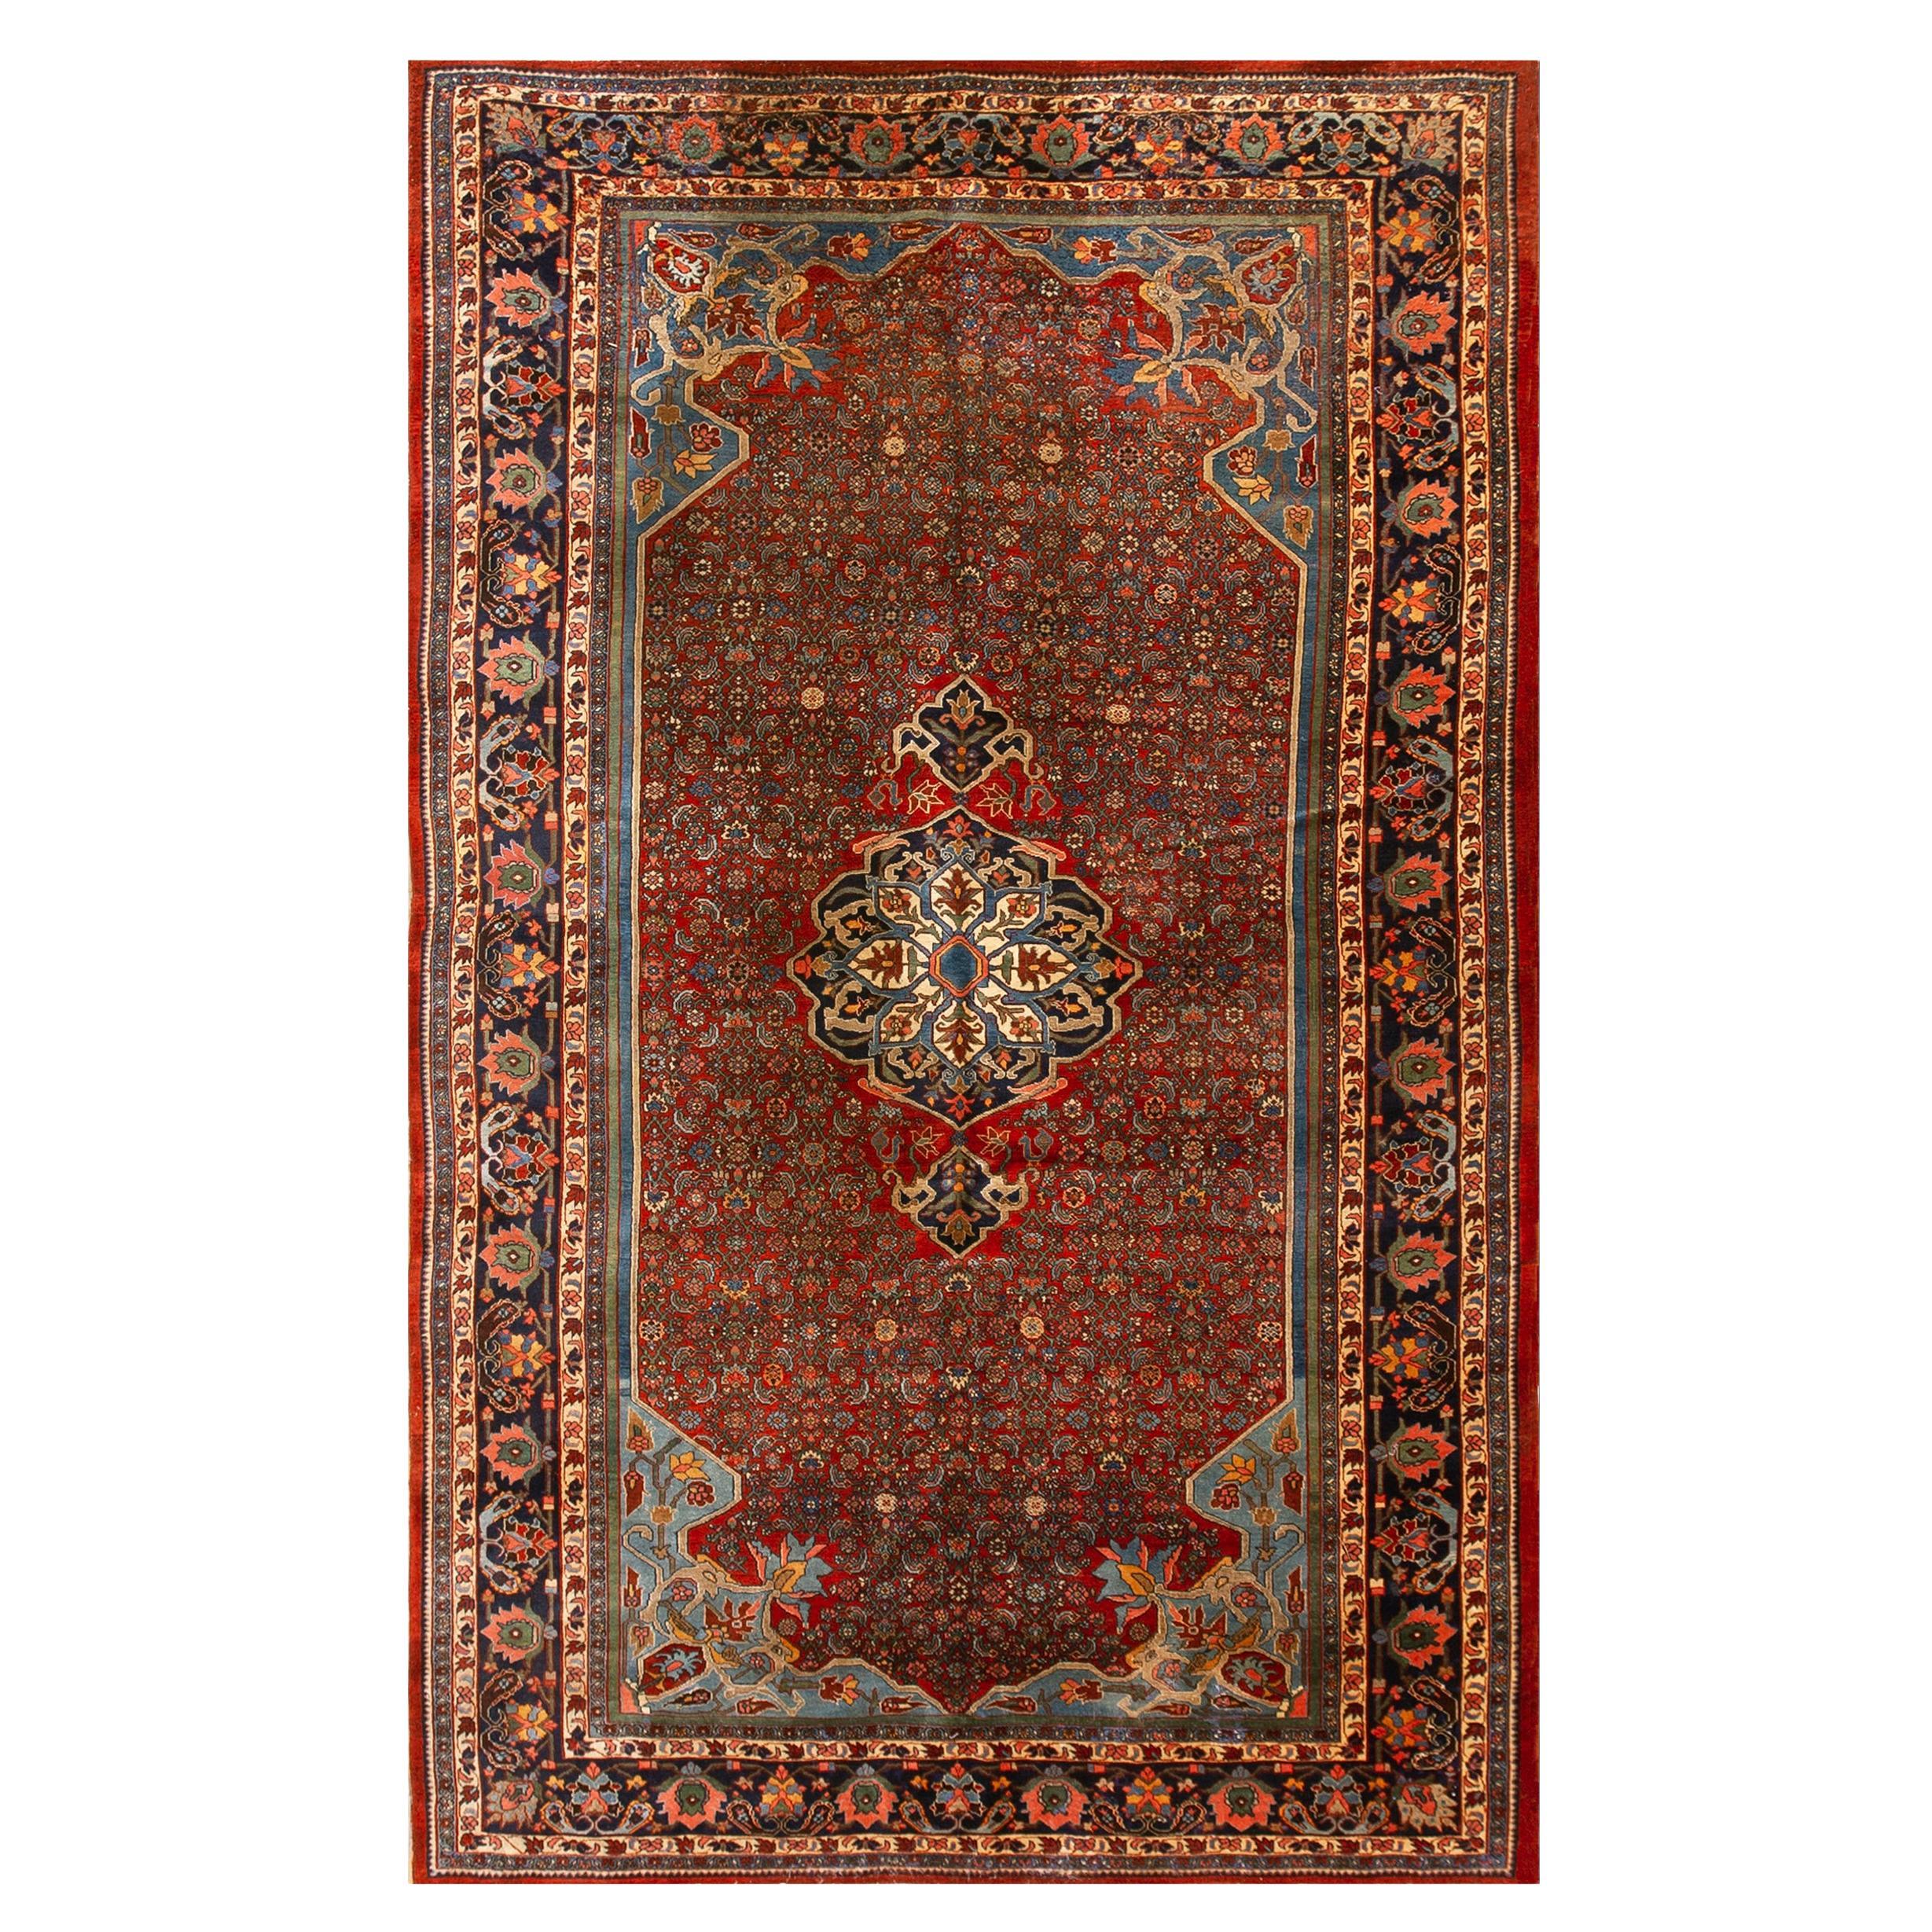 Early 20th Century Persian Bijar Carpet ( 7'6" x 12' - 230 x 365 )